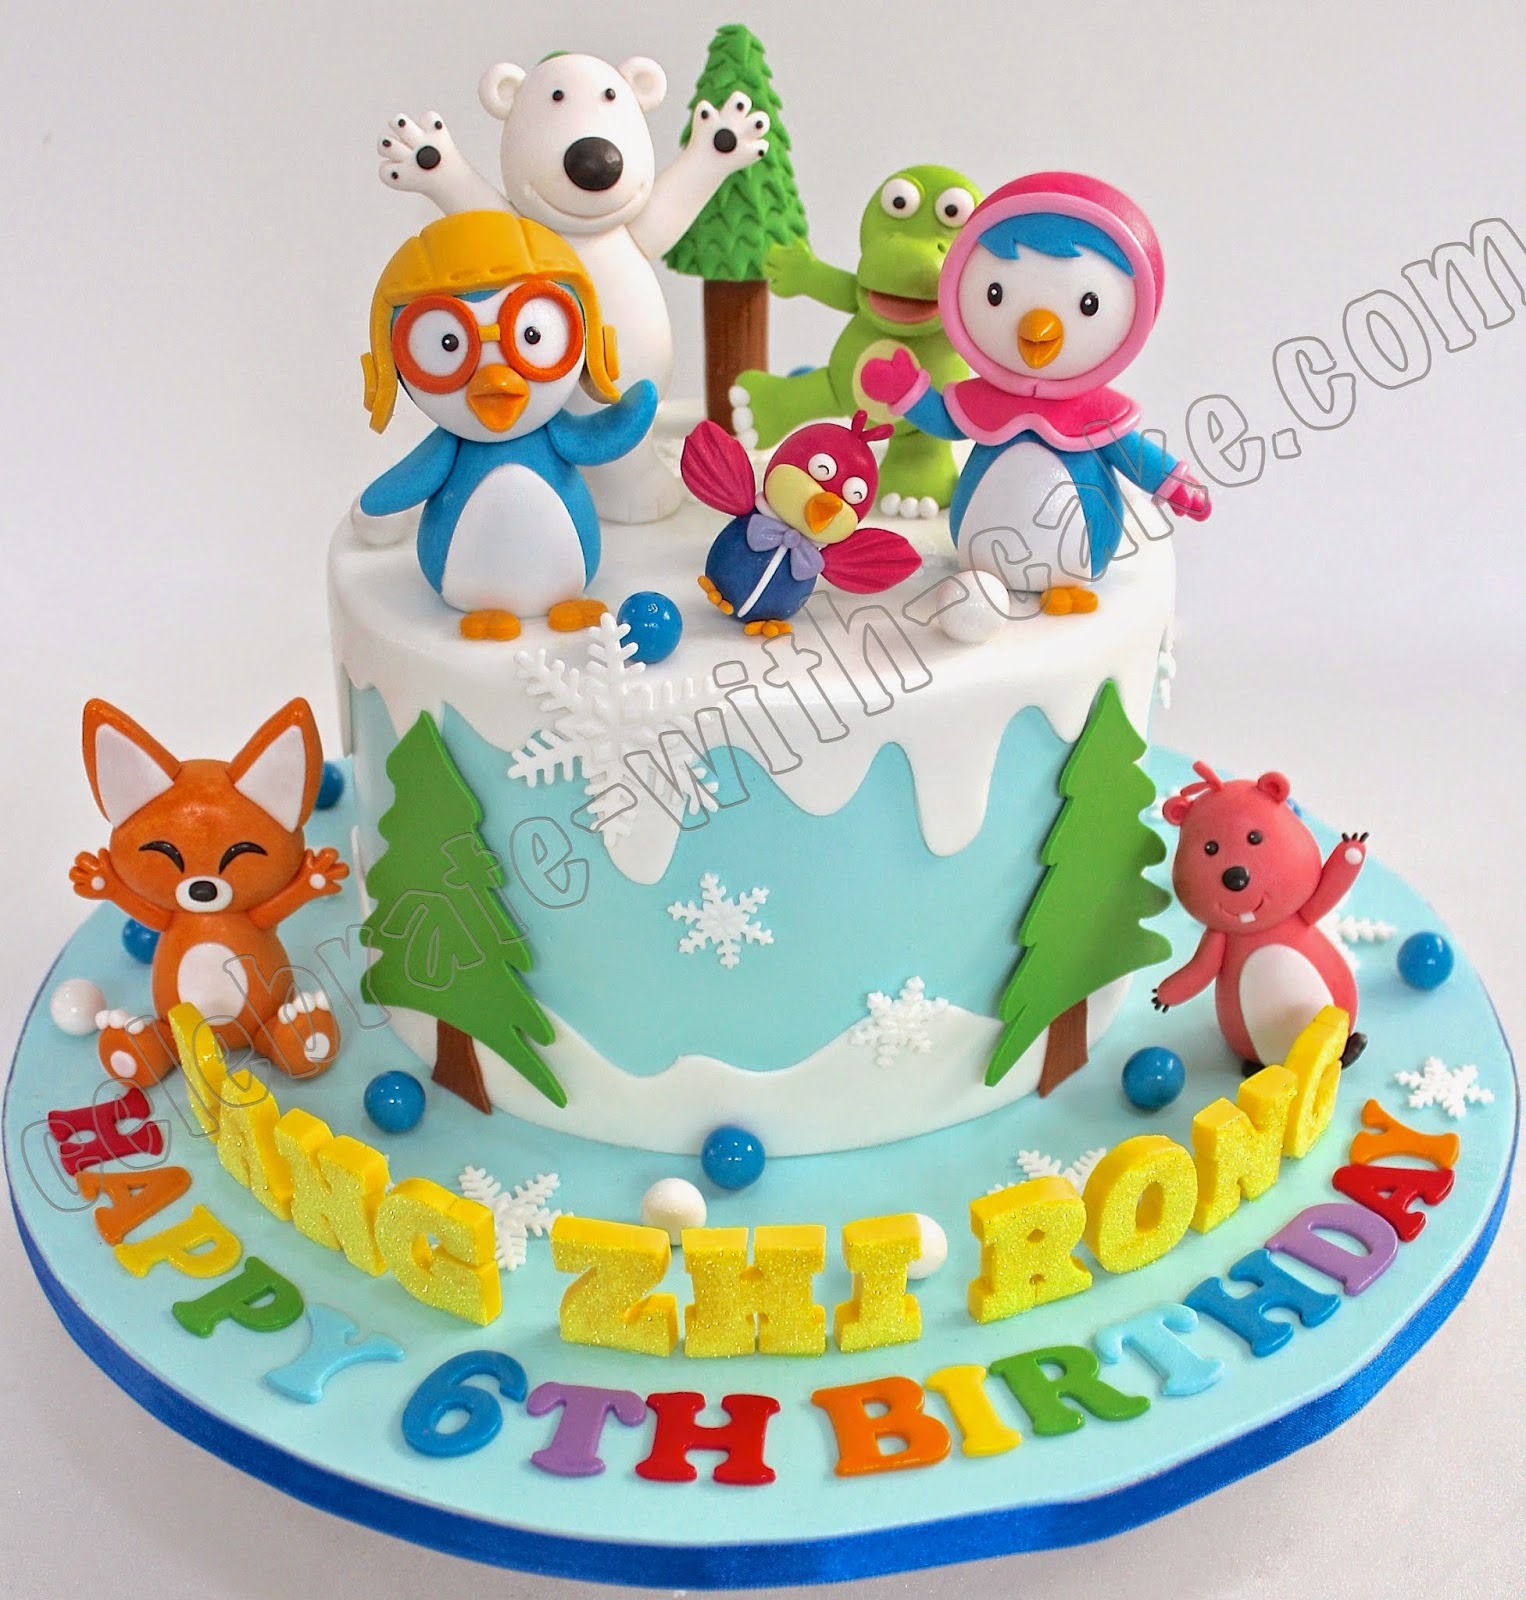 Celebrate with Cake!: Pororo and Friends single tier Cake